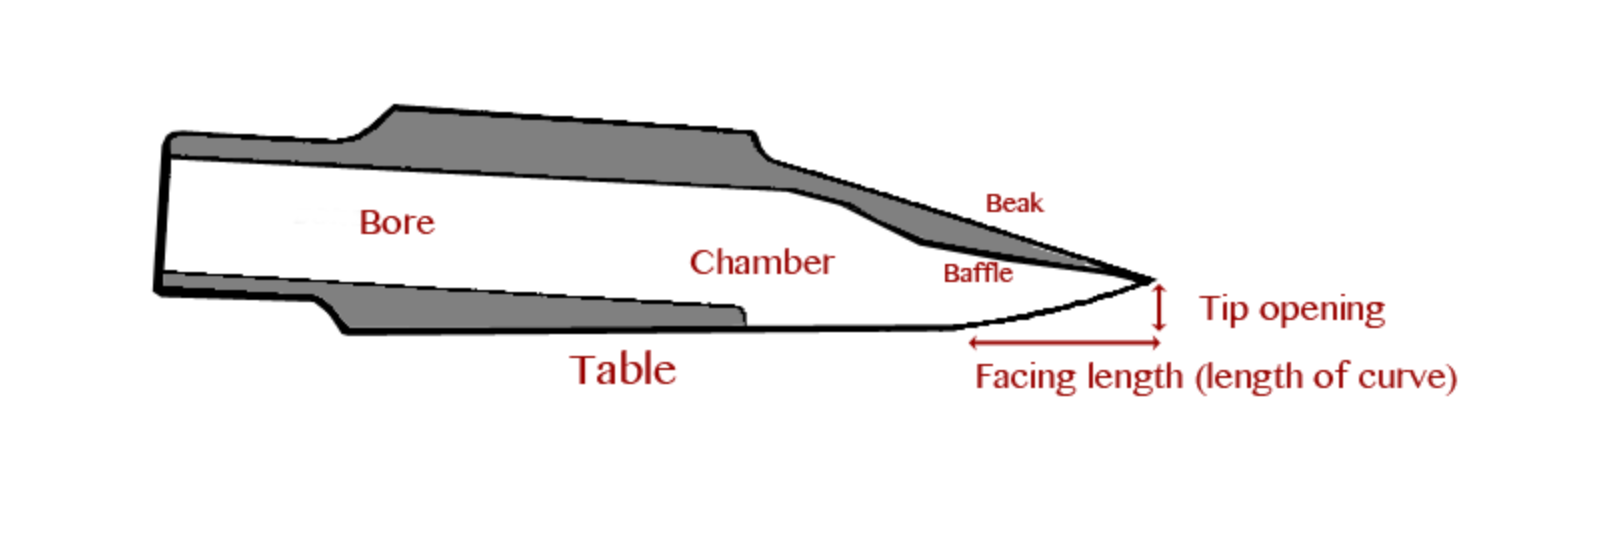 Intro to jazz saxophone: cutaway diagram of the saxophone mouthpiece